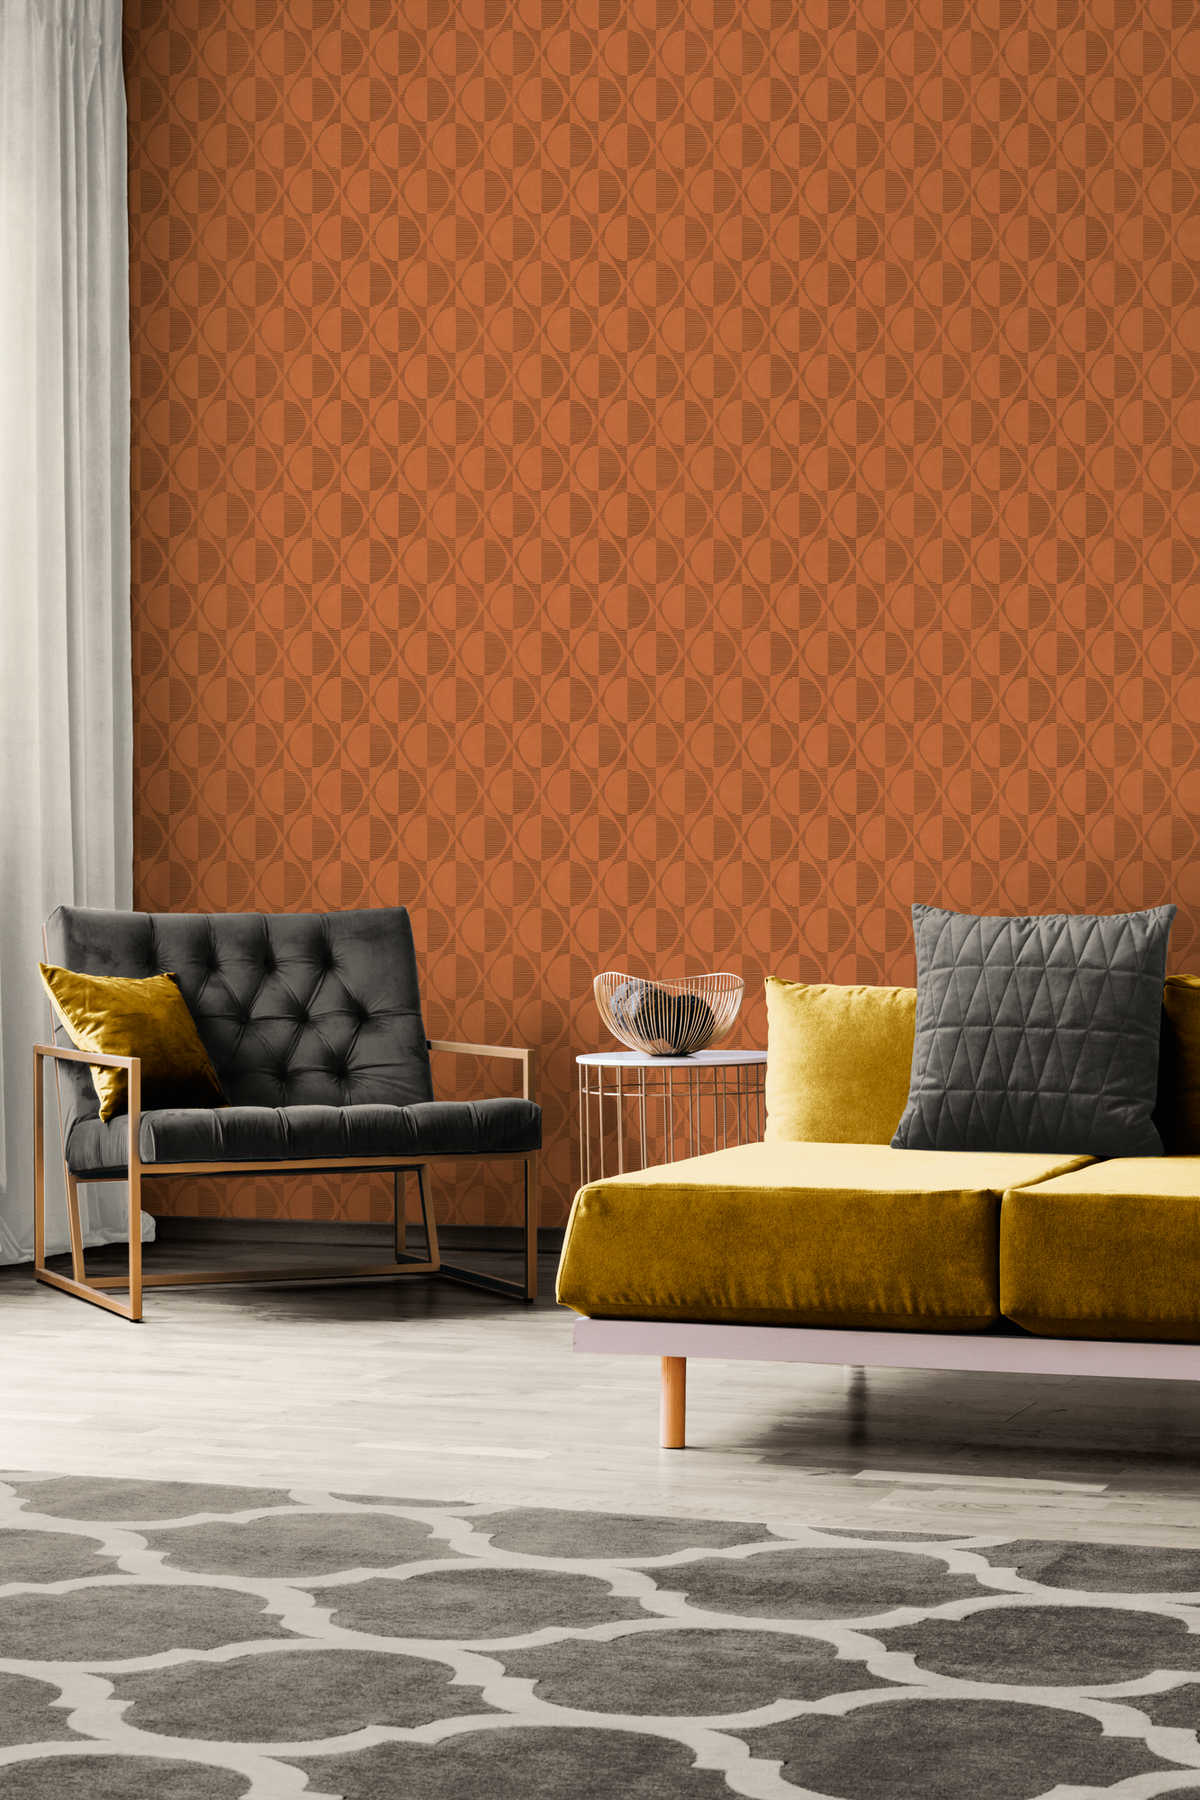             Retro wallpaper with circle and diamond pattern - orange, black
        